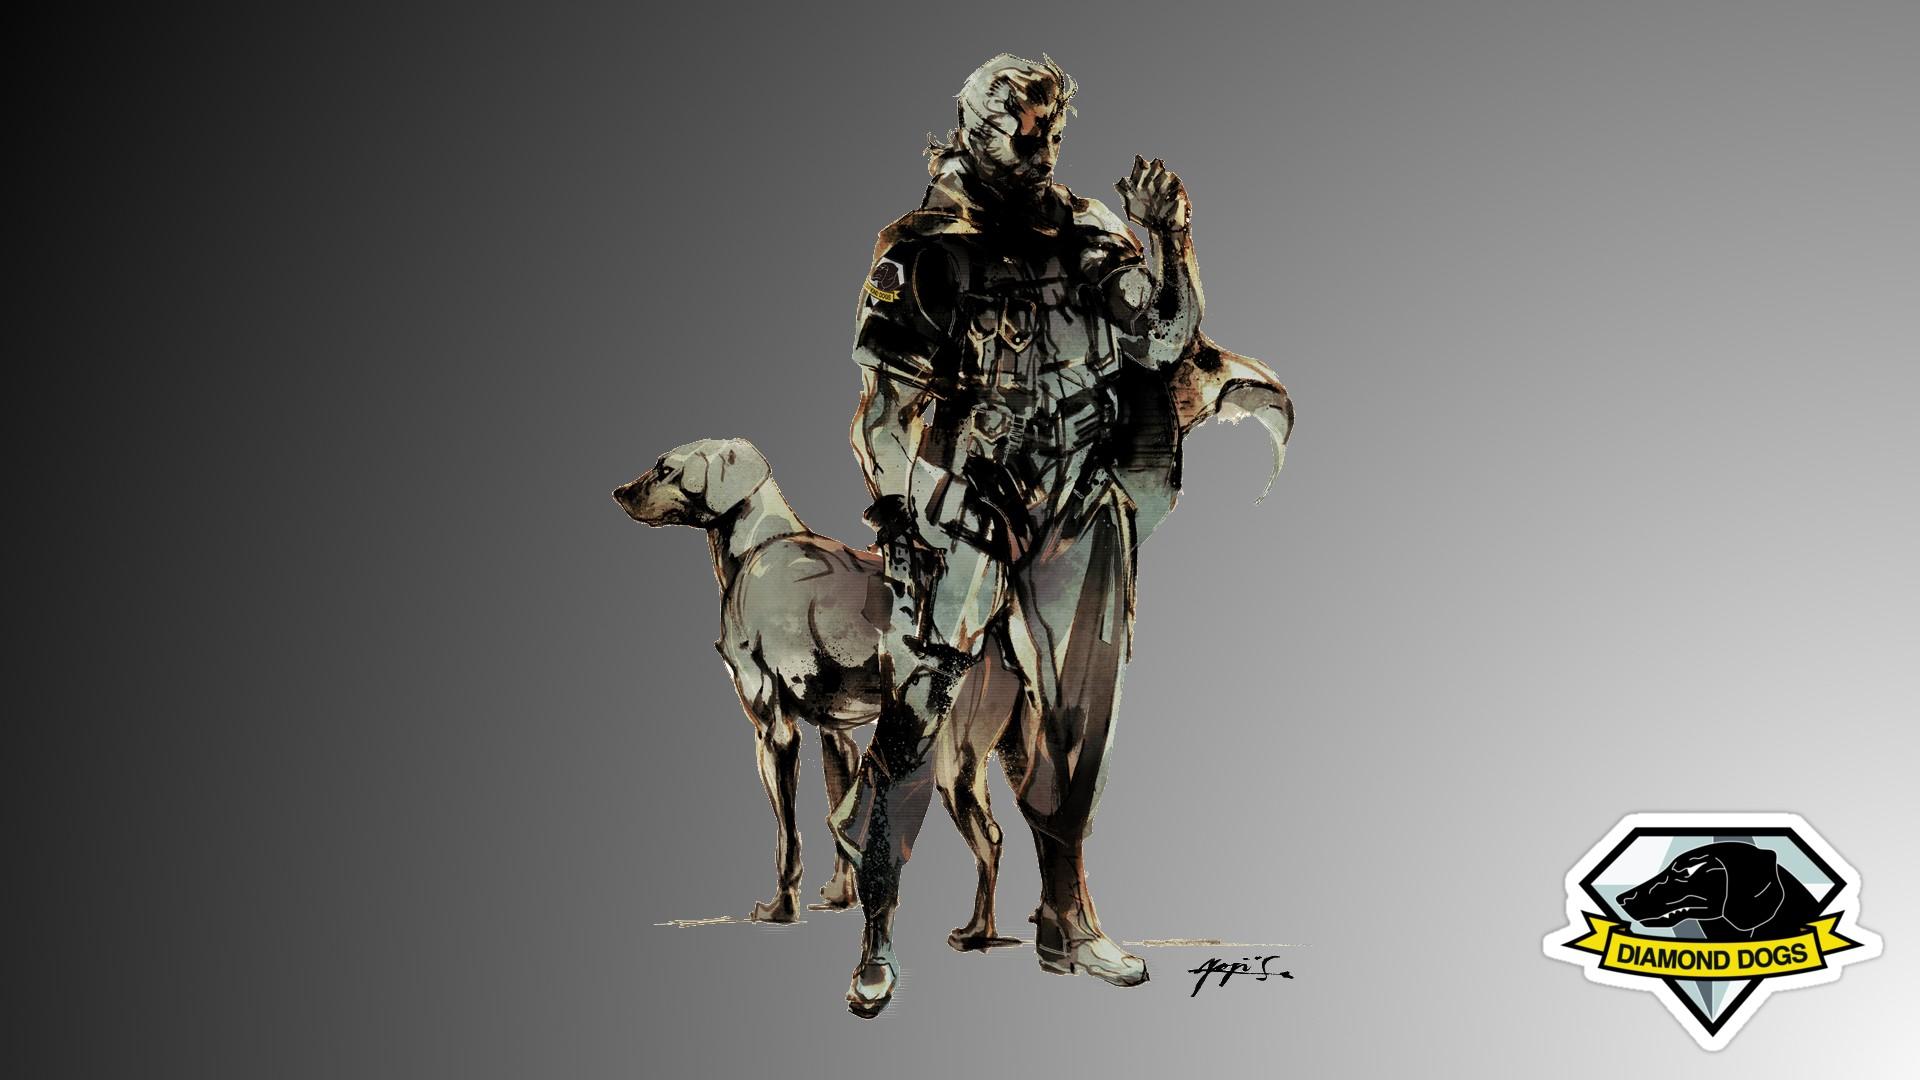 Metal Gear Solid 5 The Phantom Pain Wallpaper 41062